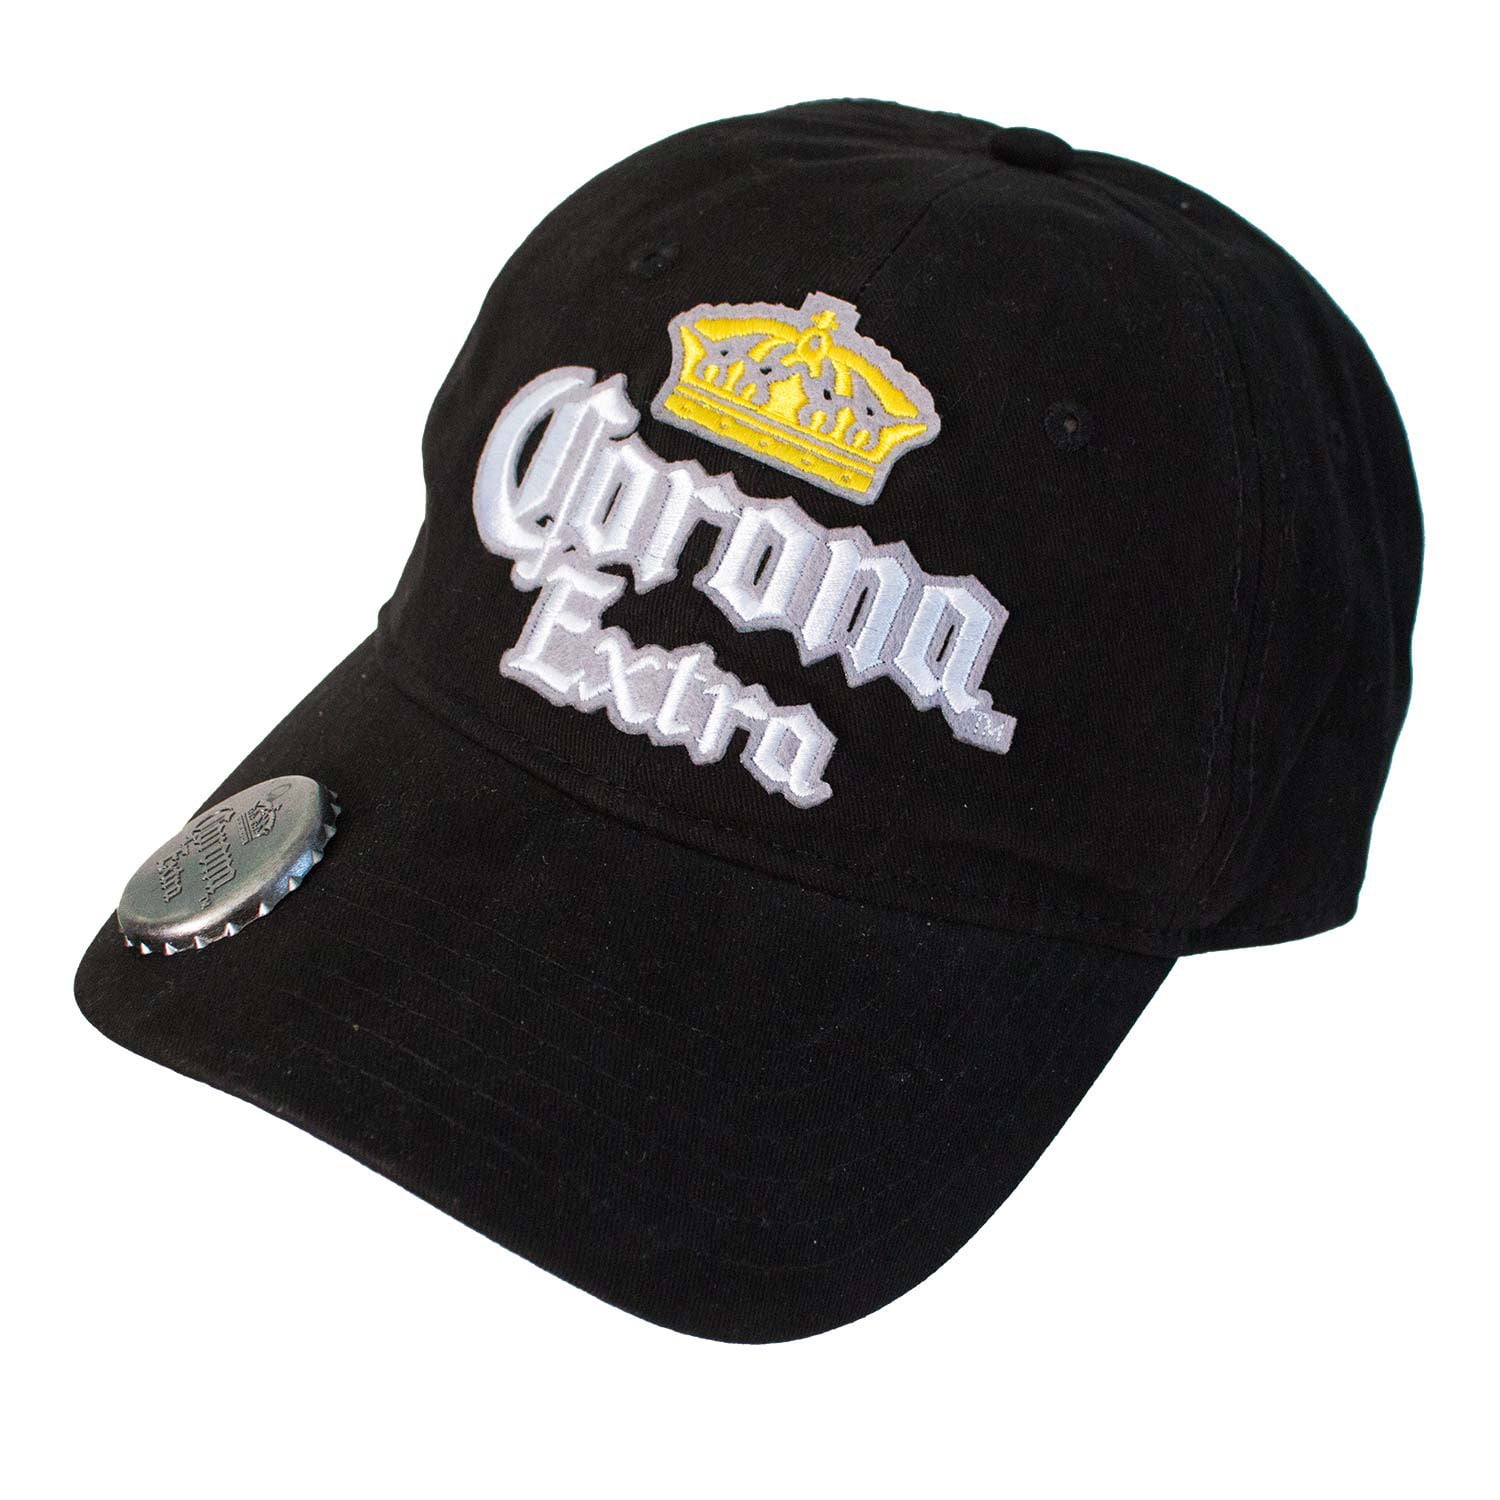 Corona Extra Beer Modelo Advertising Black Baseball Cap Hat New 1 Size Fits All 